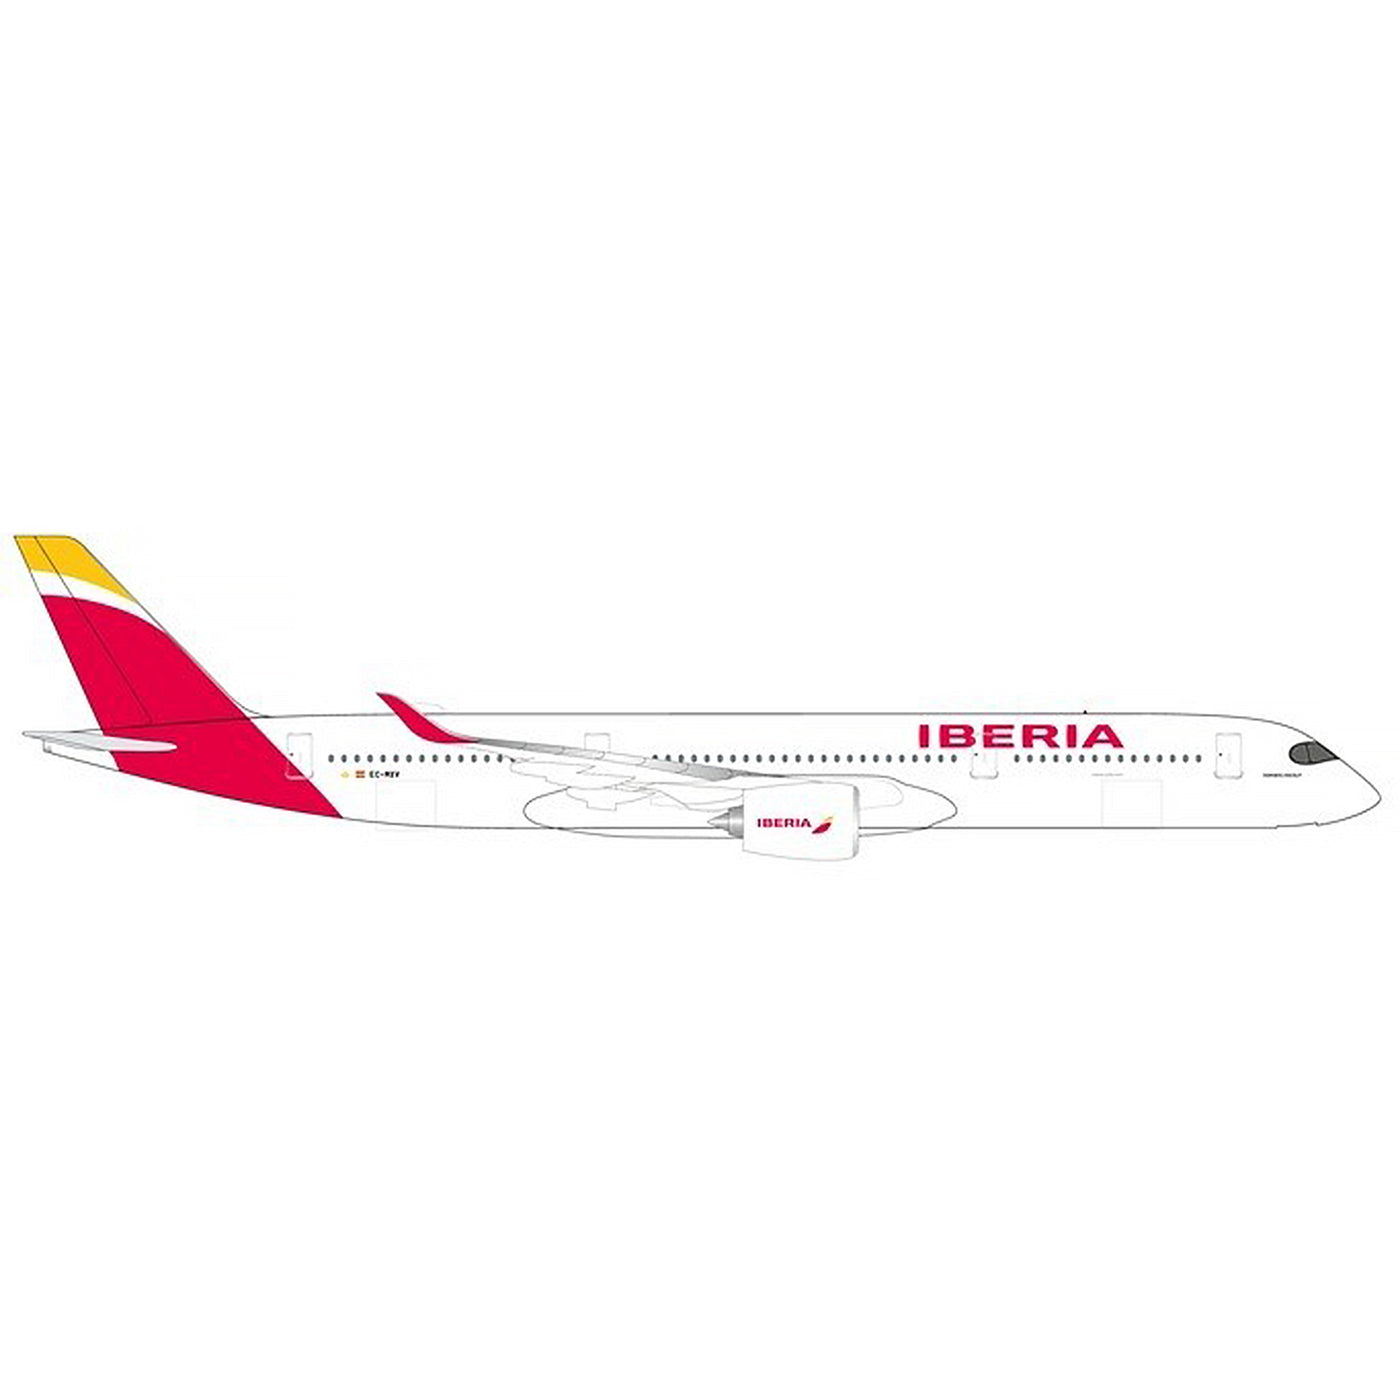 Herpa - 1/500 Iberia A350-900 EC-MXV